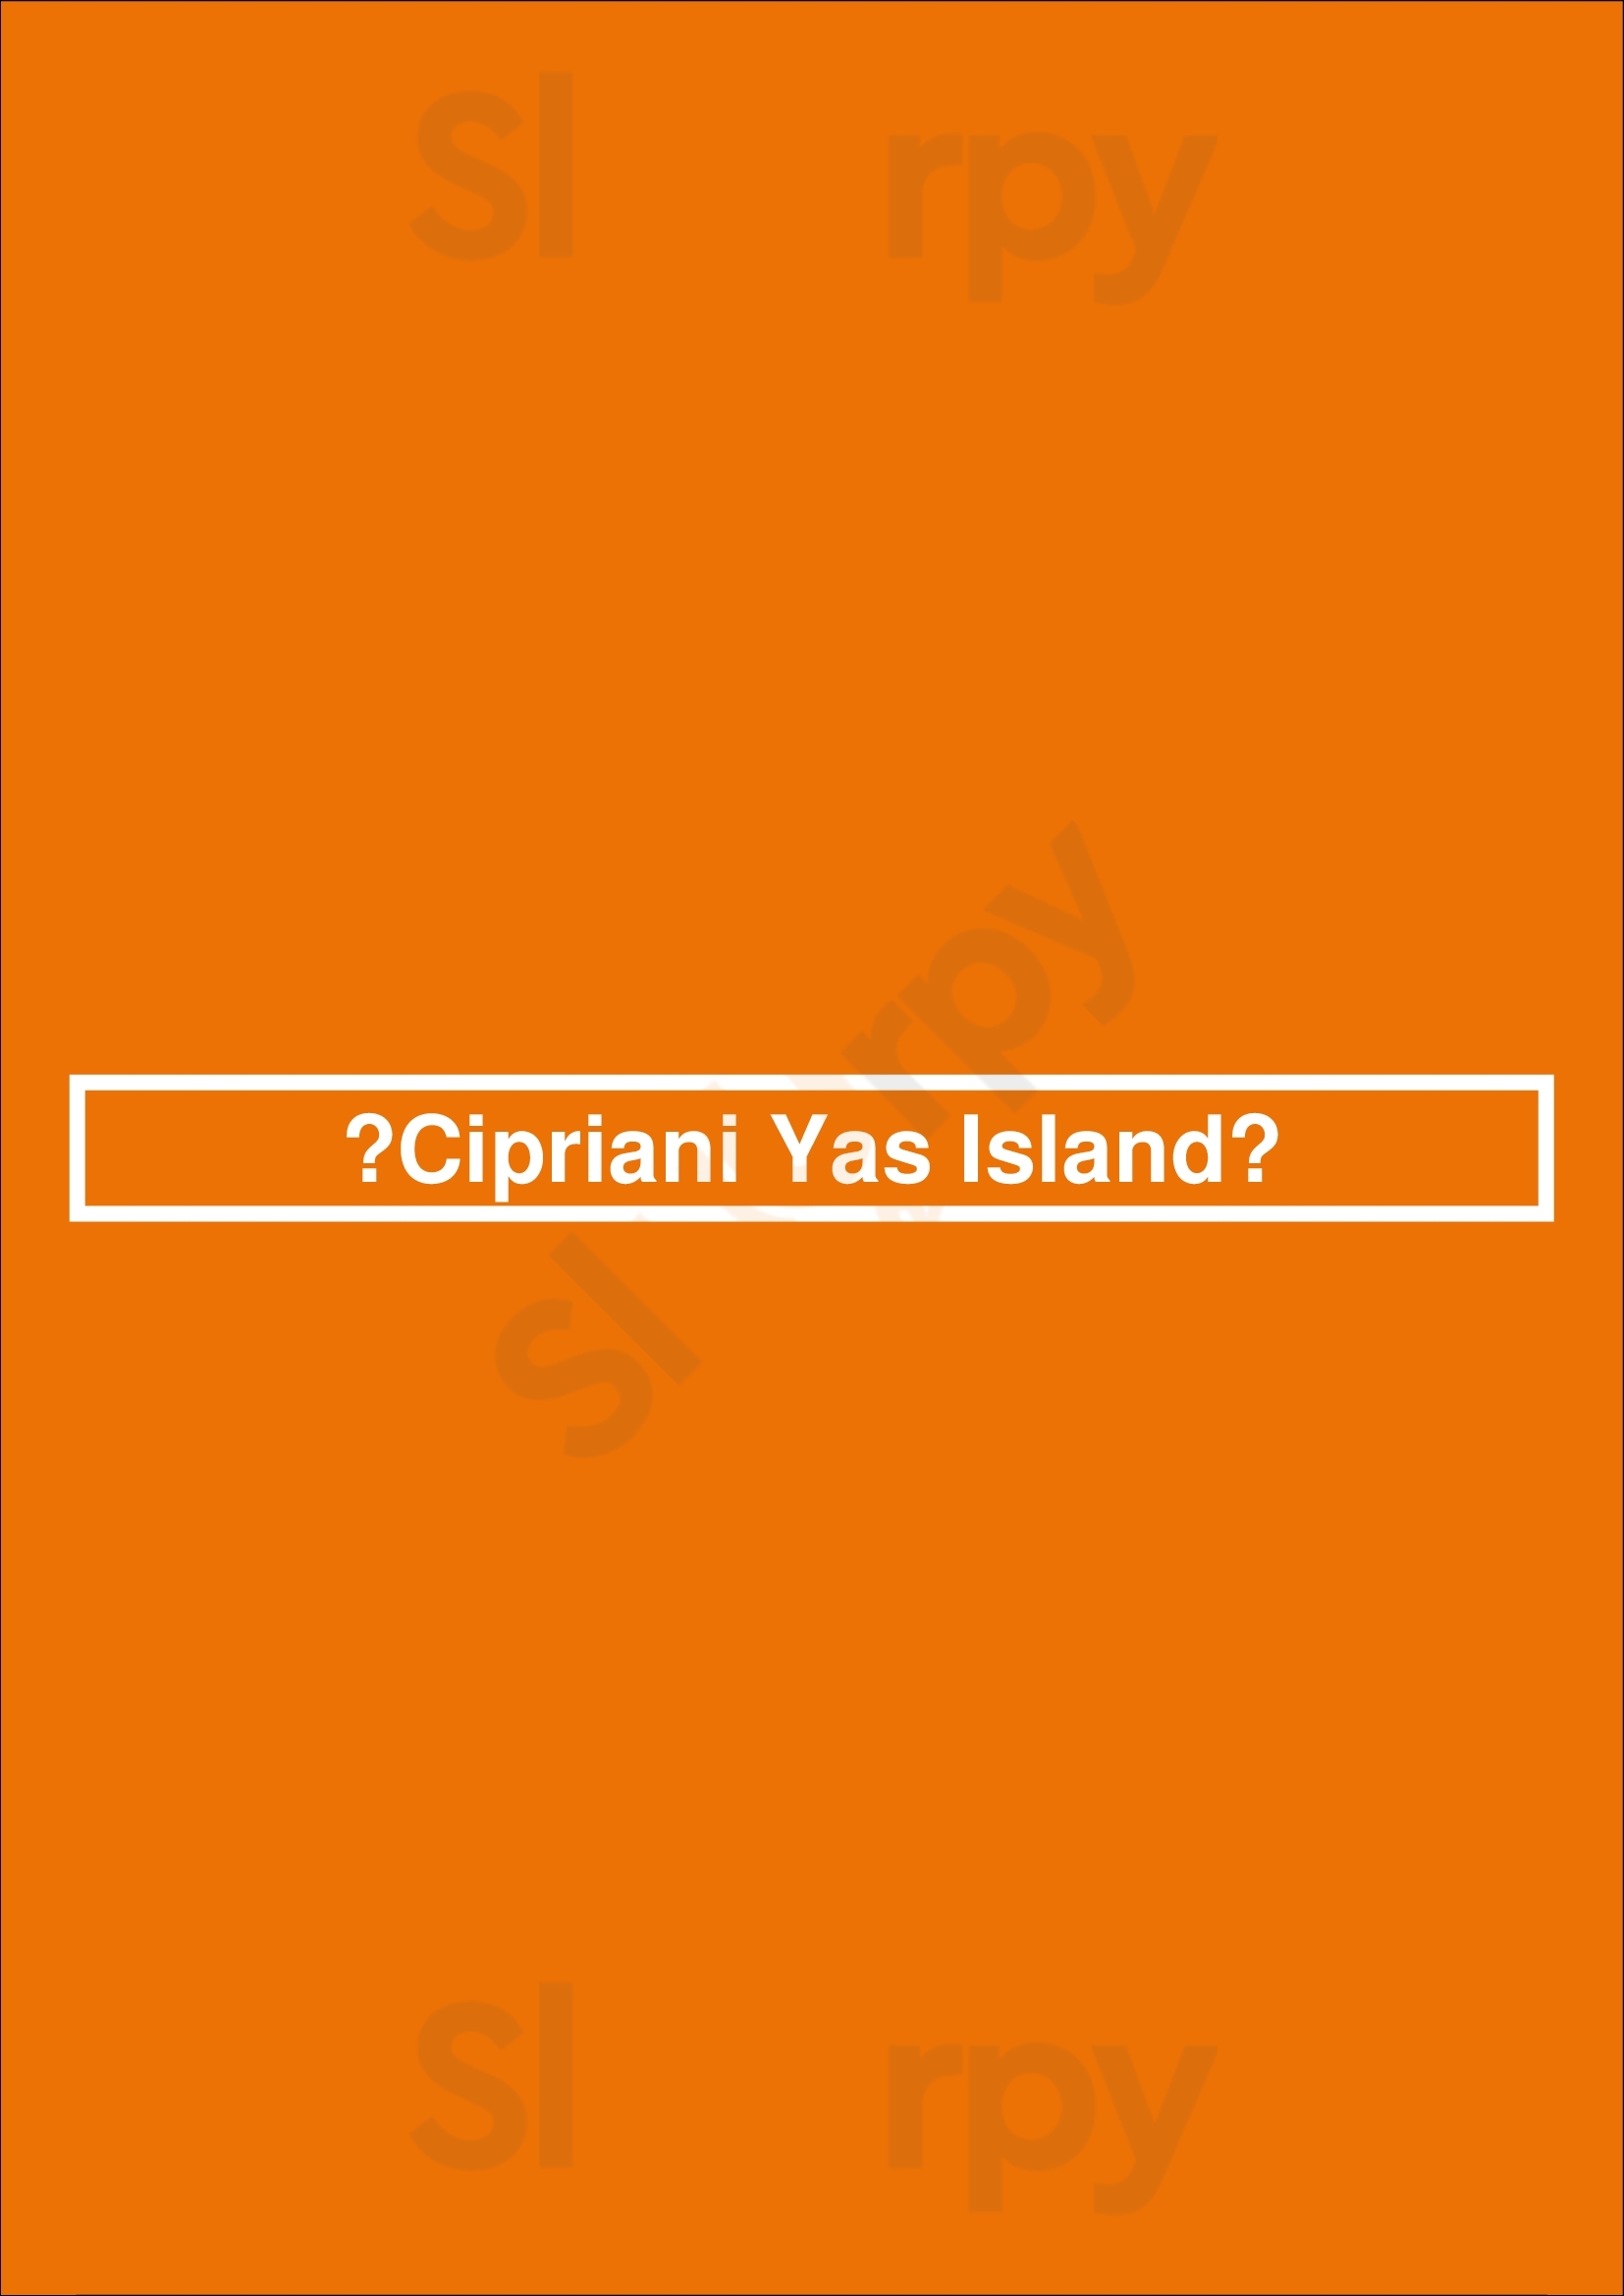 ‪cipriani Yas Island‬ أبو ظبي Menu - 1